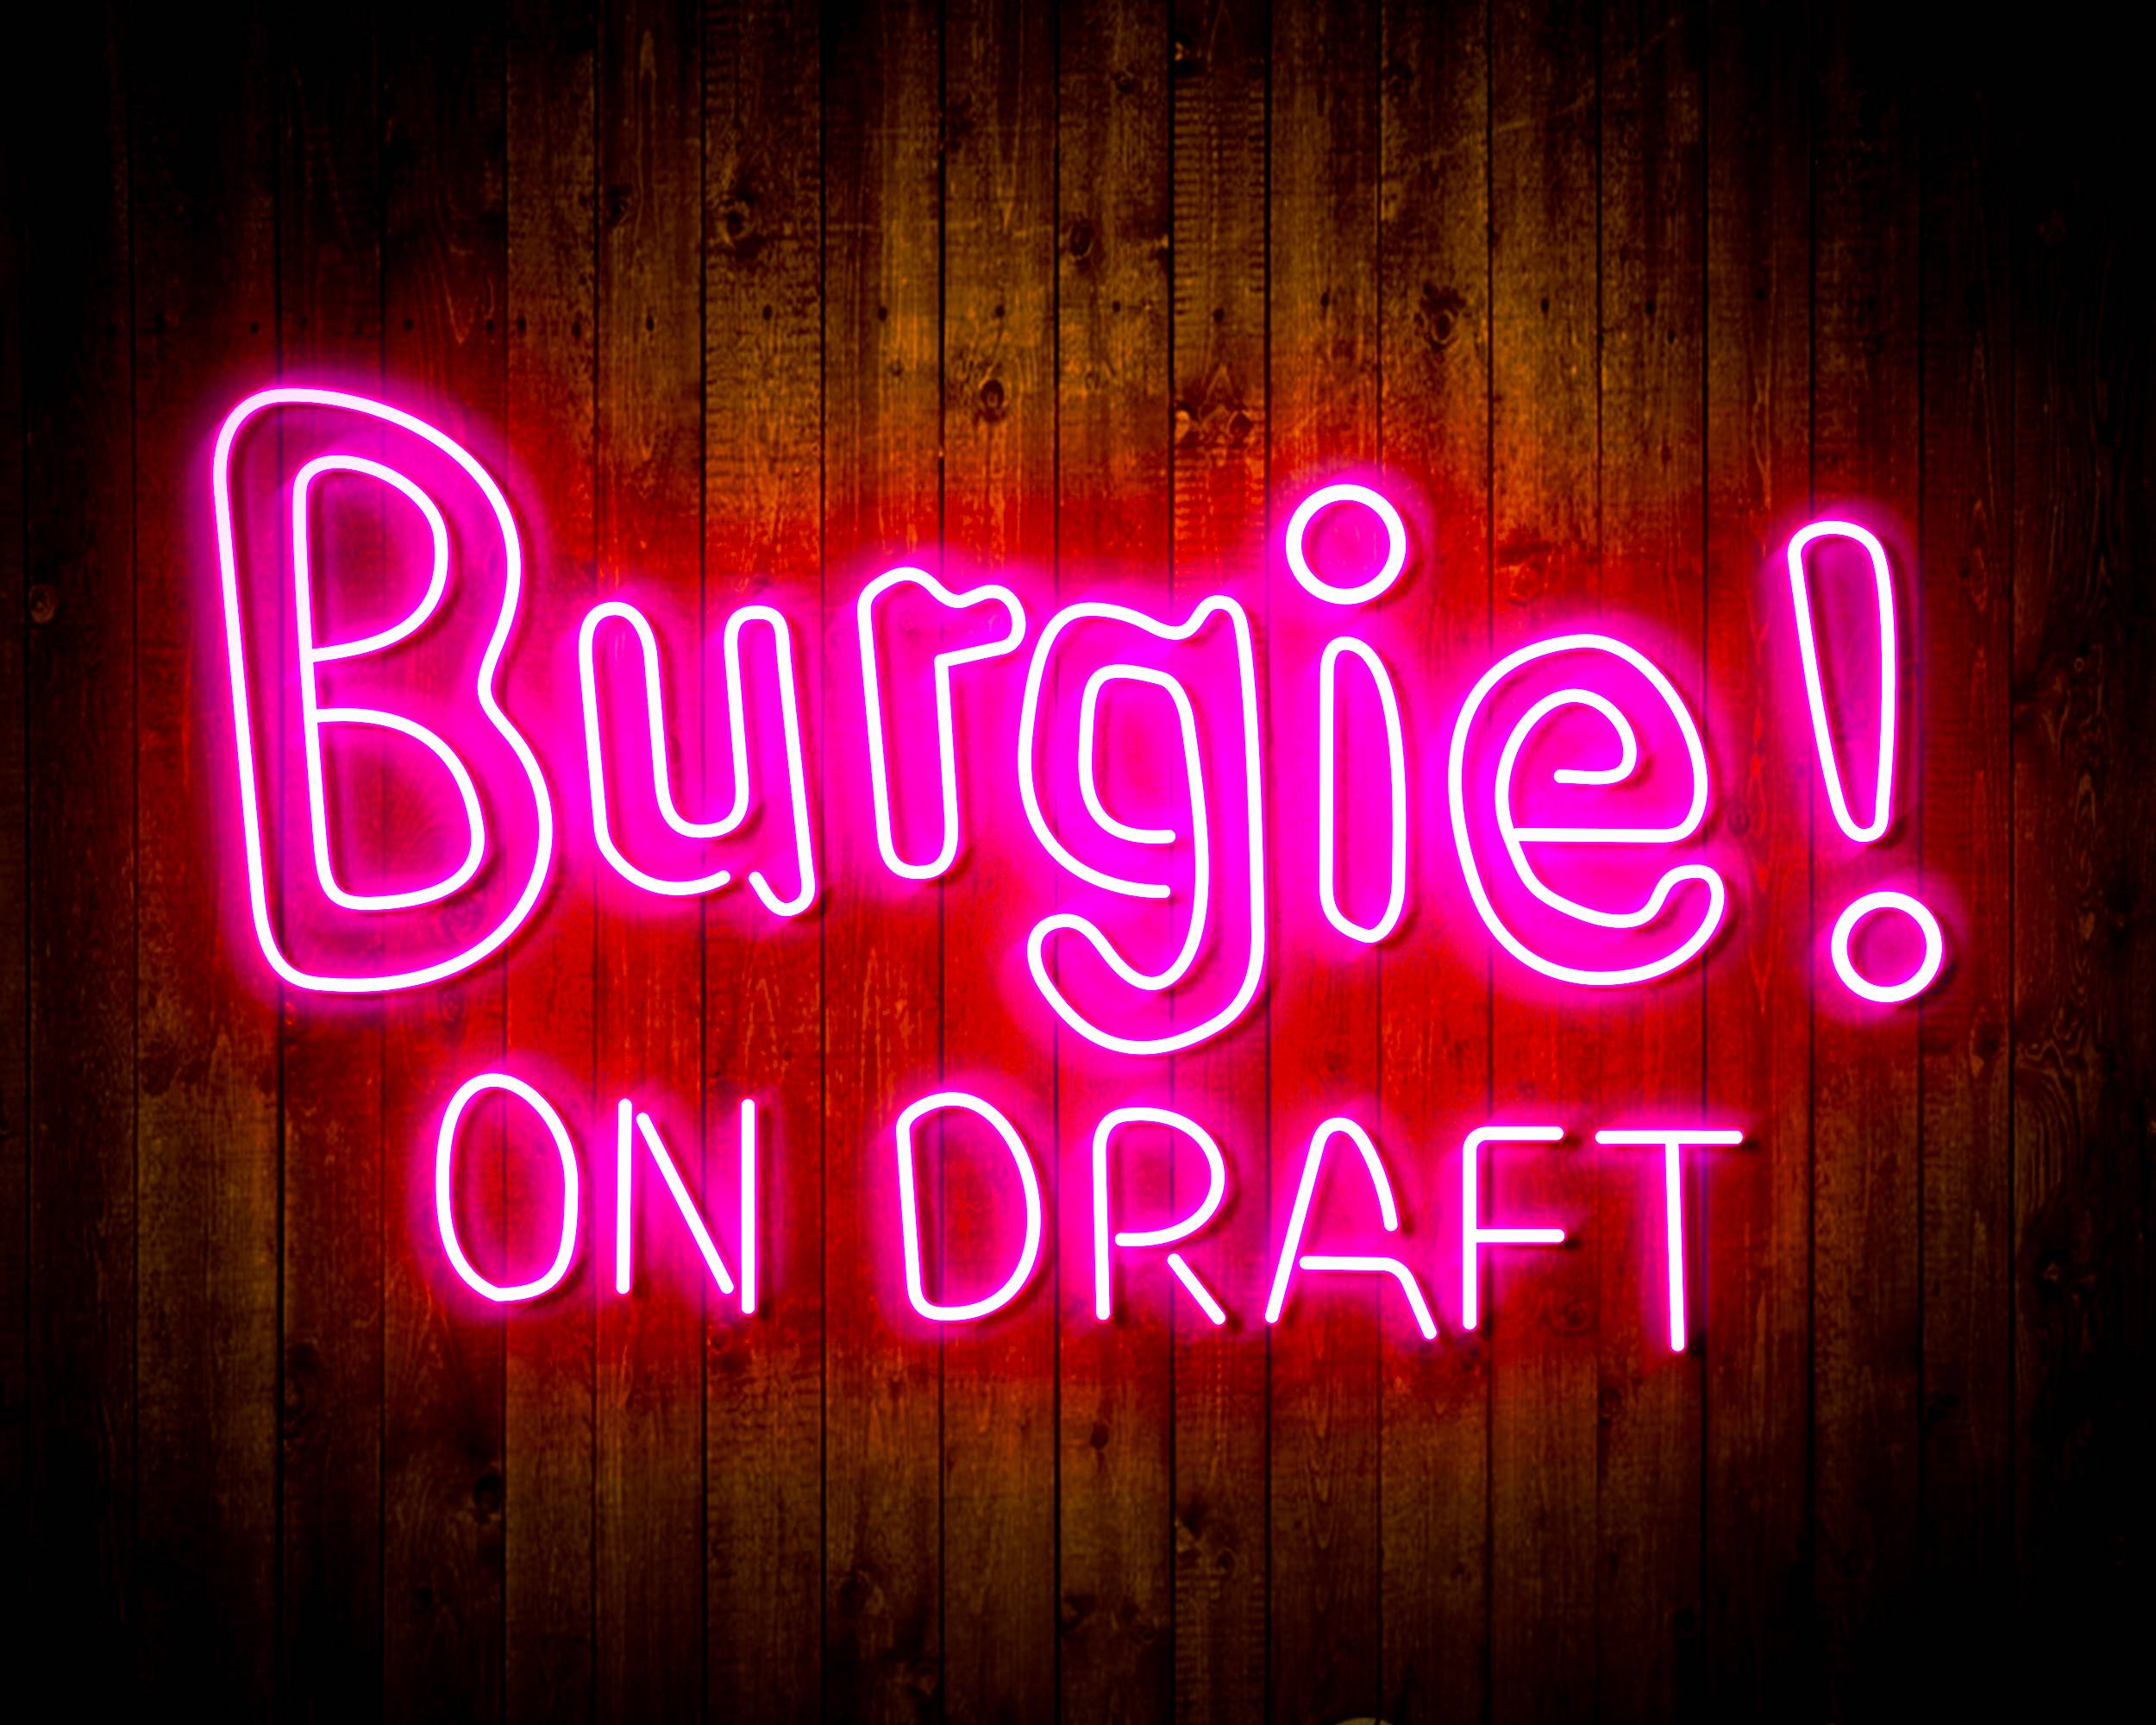 Burgie! On Draft Handmade Neon Flex LED Sign